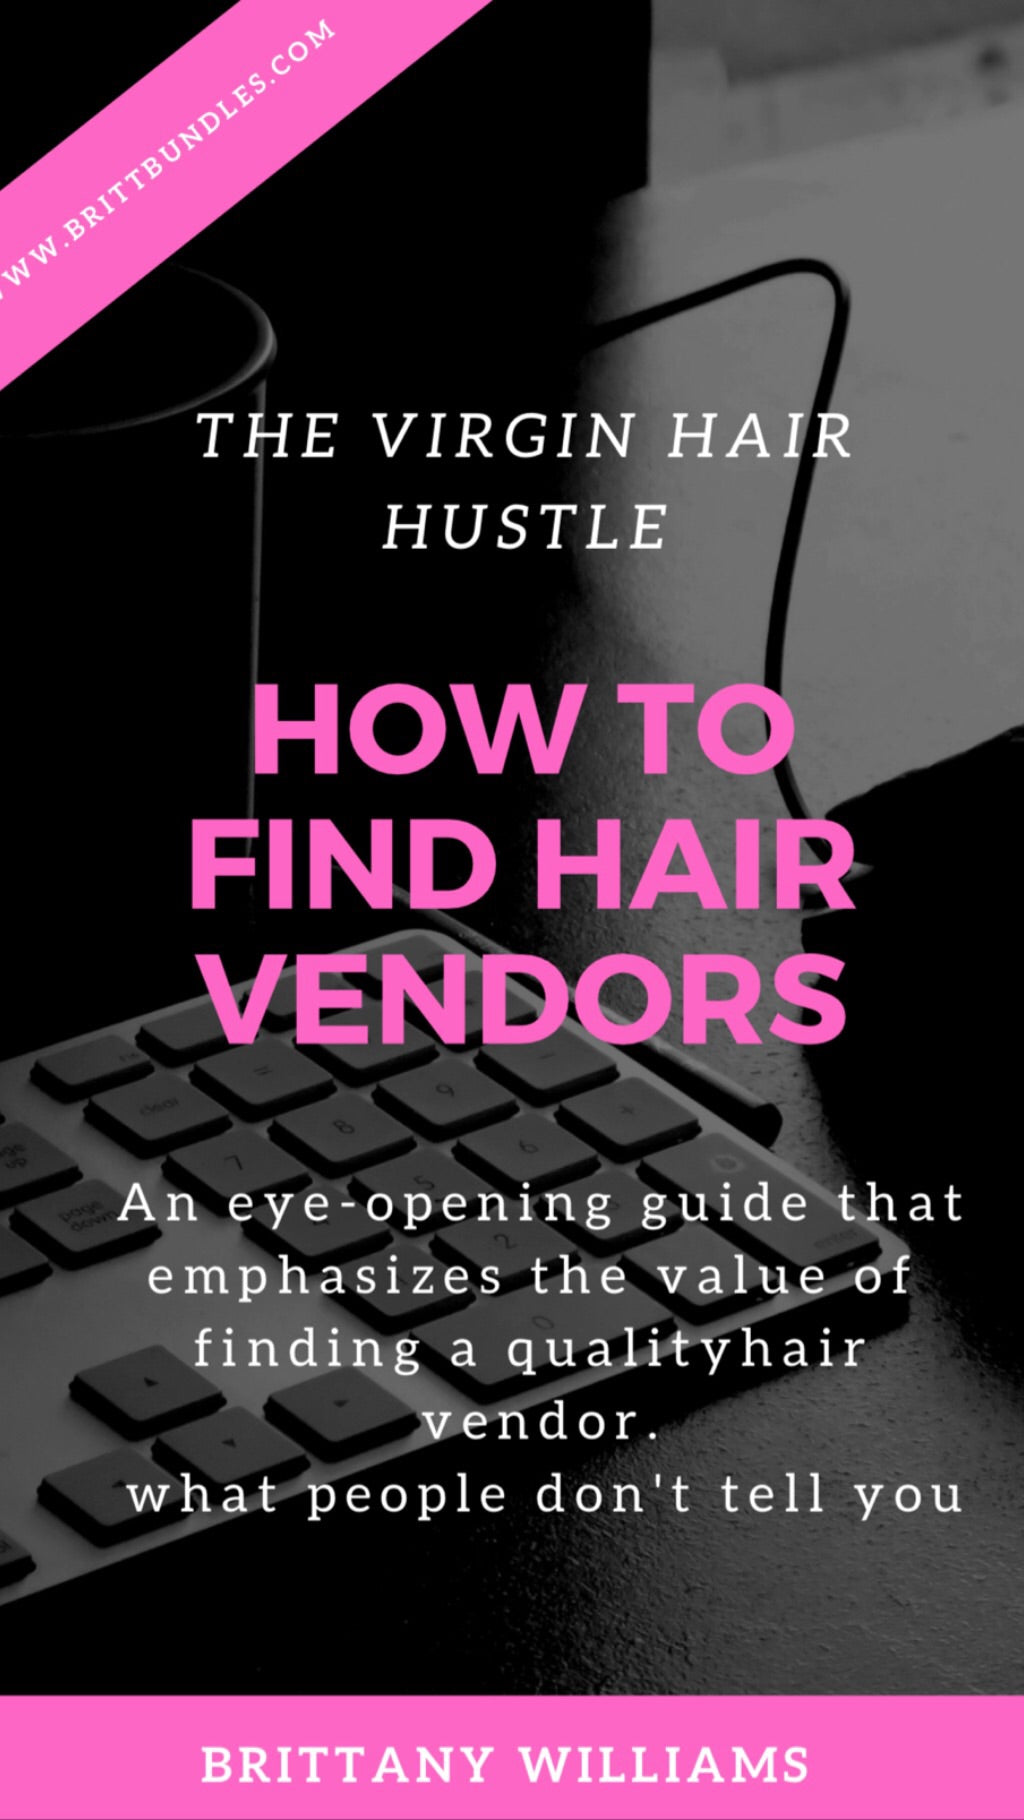 The Virgin Hair Hustle Ebook ( How to find a hair vendor)